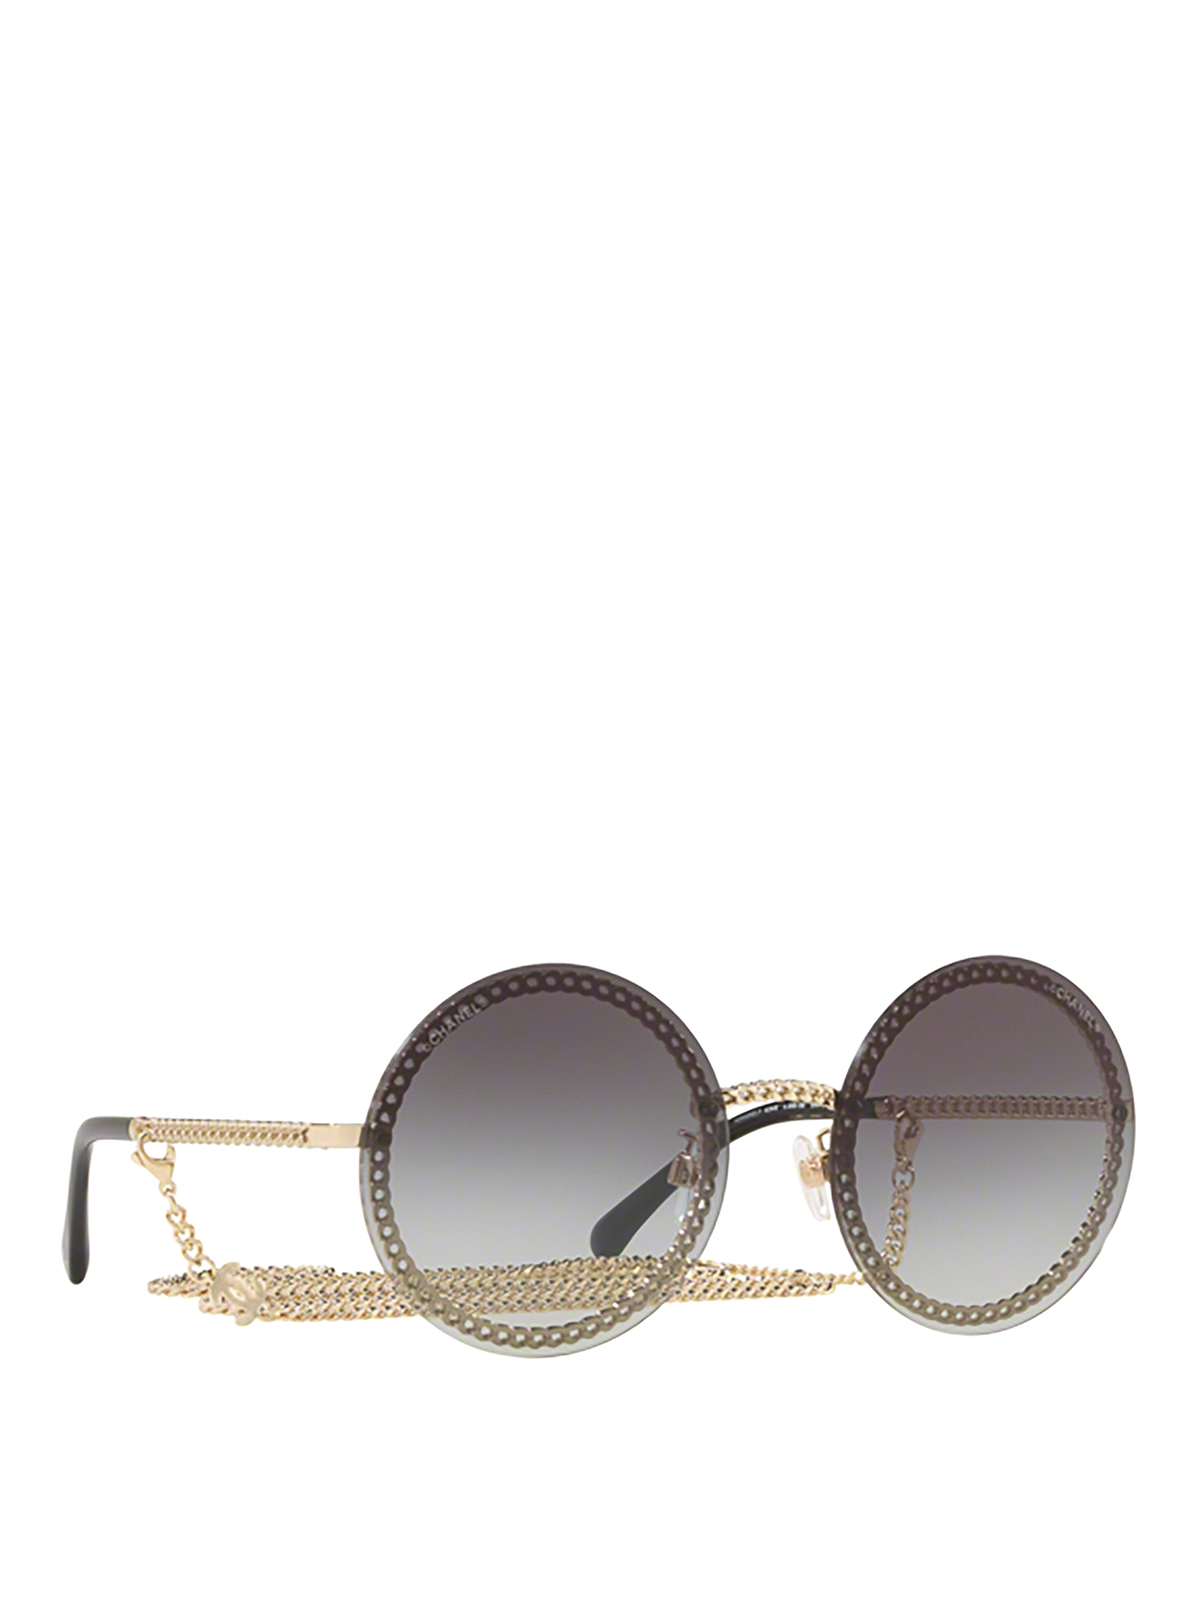 Sunglasses Chanel - Chain embellished black round sunglasses